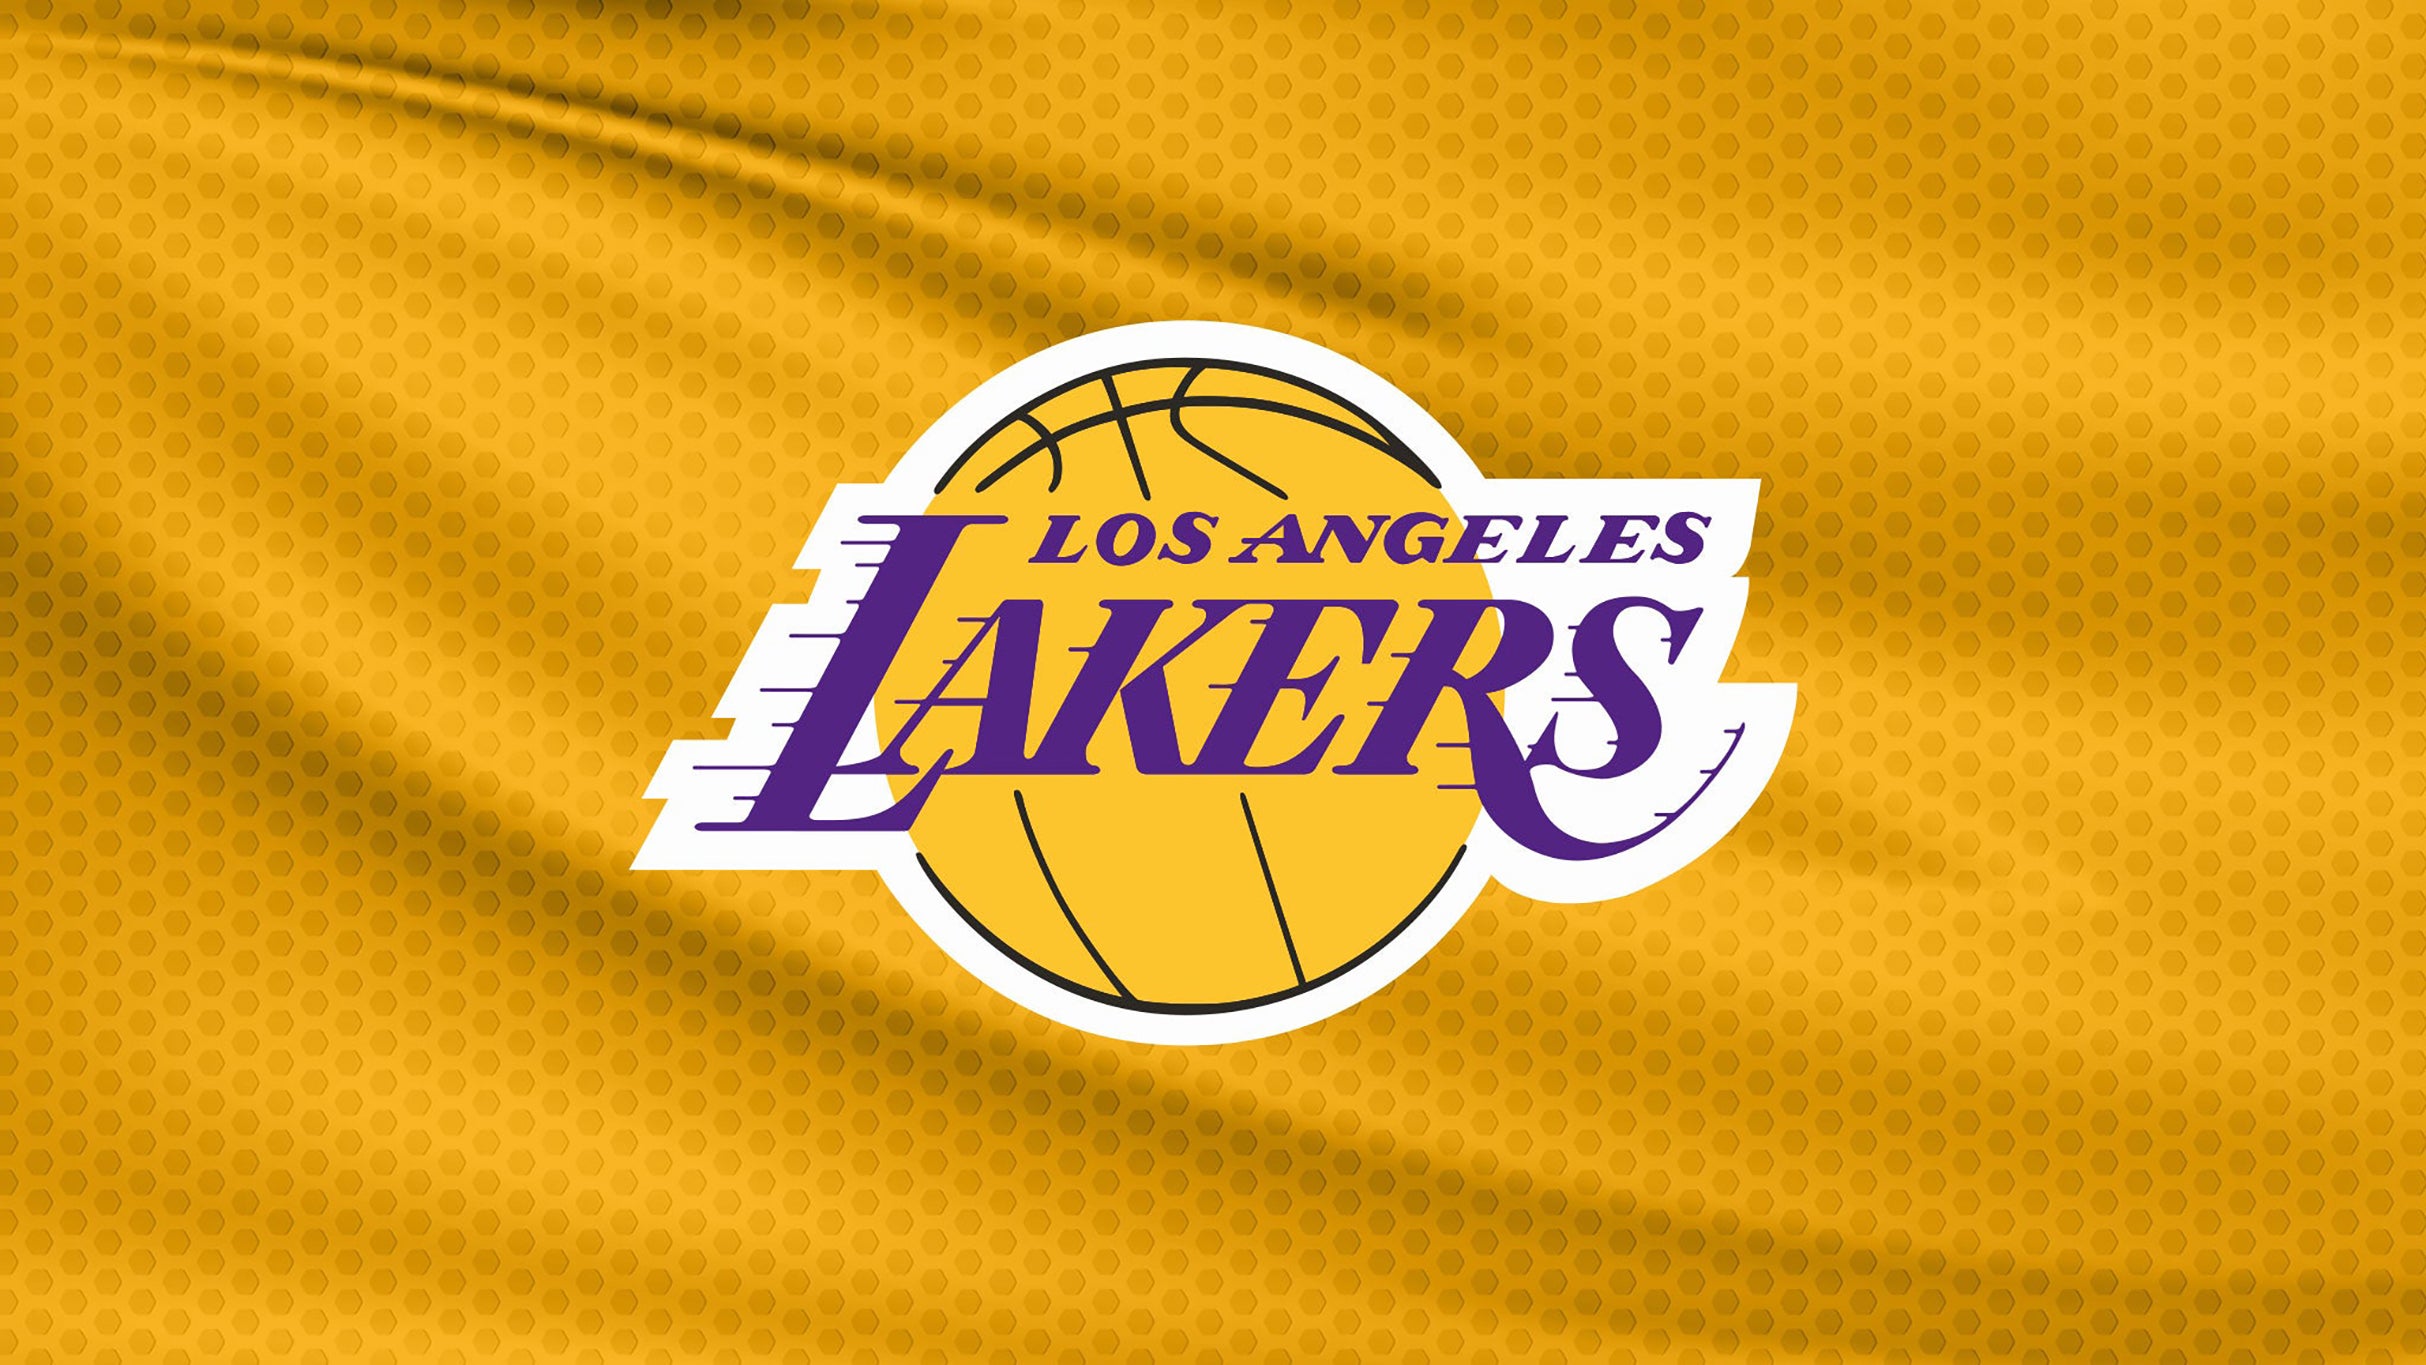 Los Angeles Lakers vs Phoenix Suns presale password for advance tickets in Palm Desert